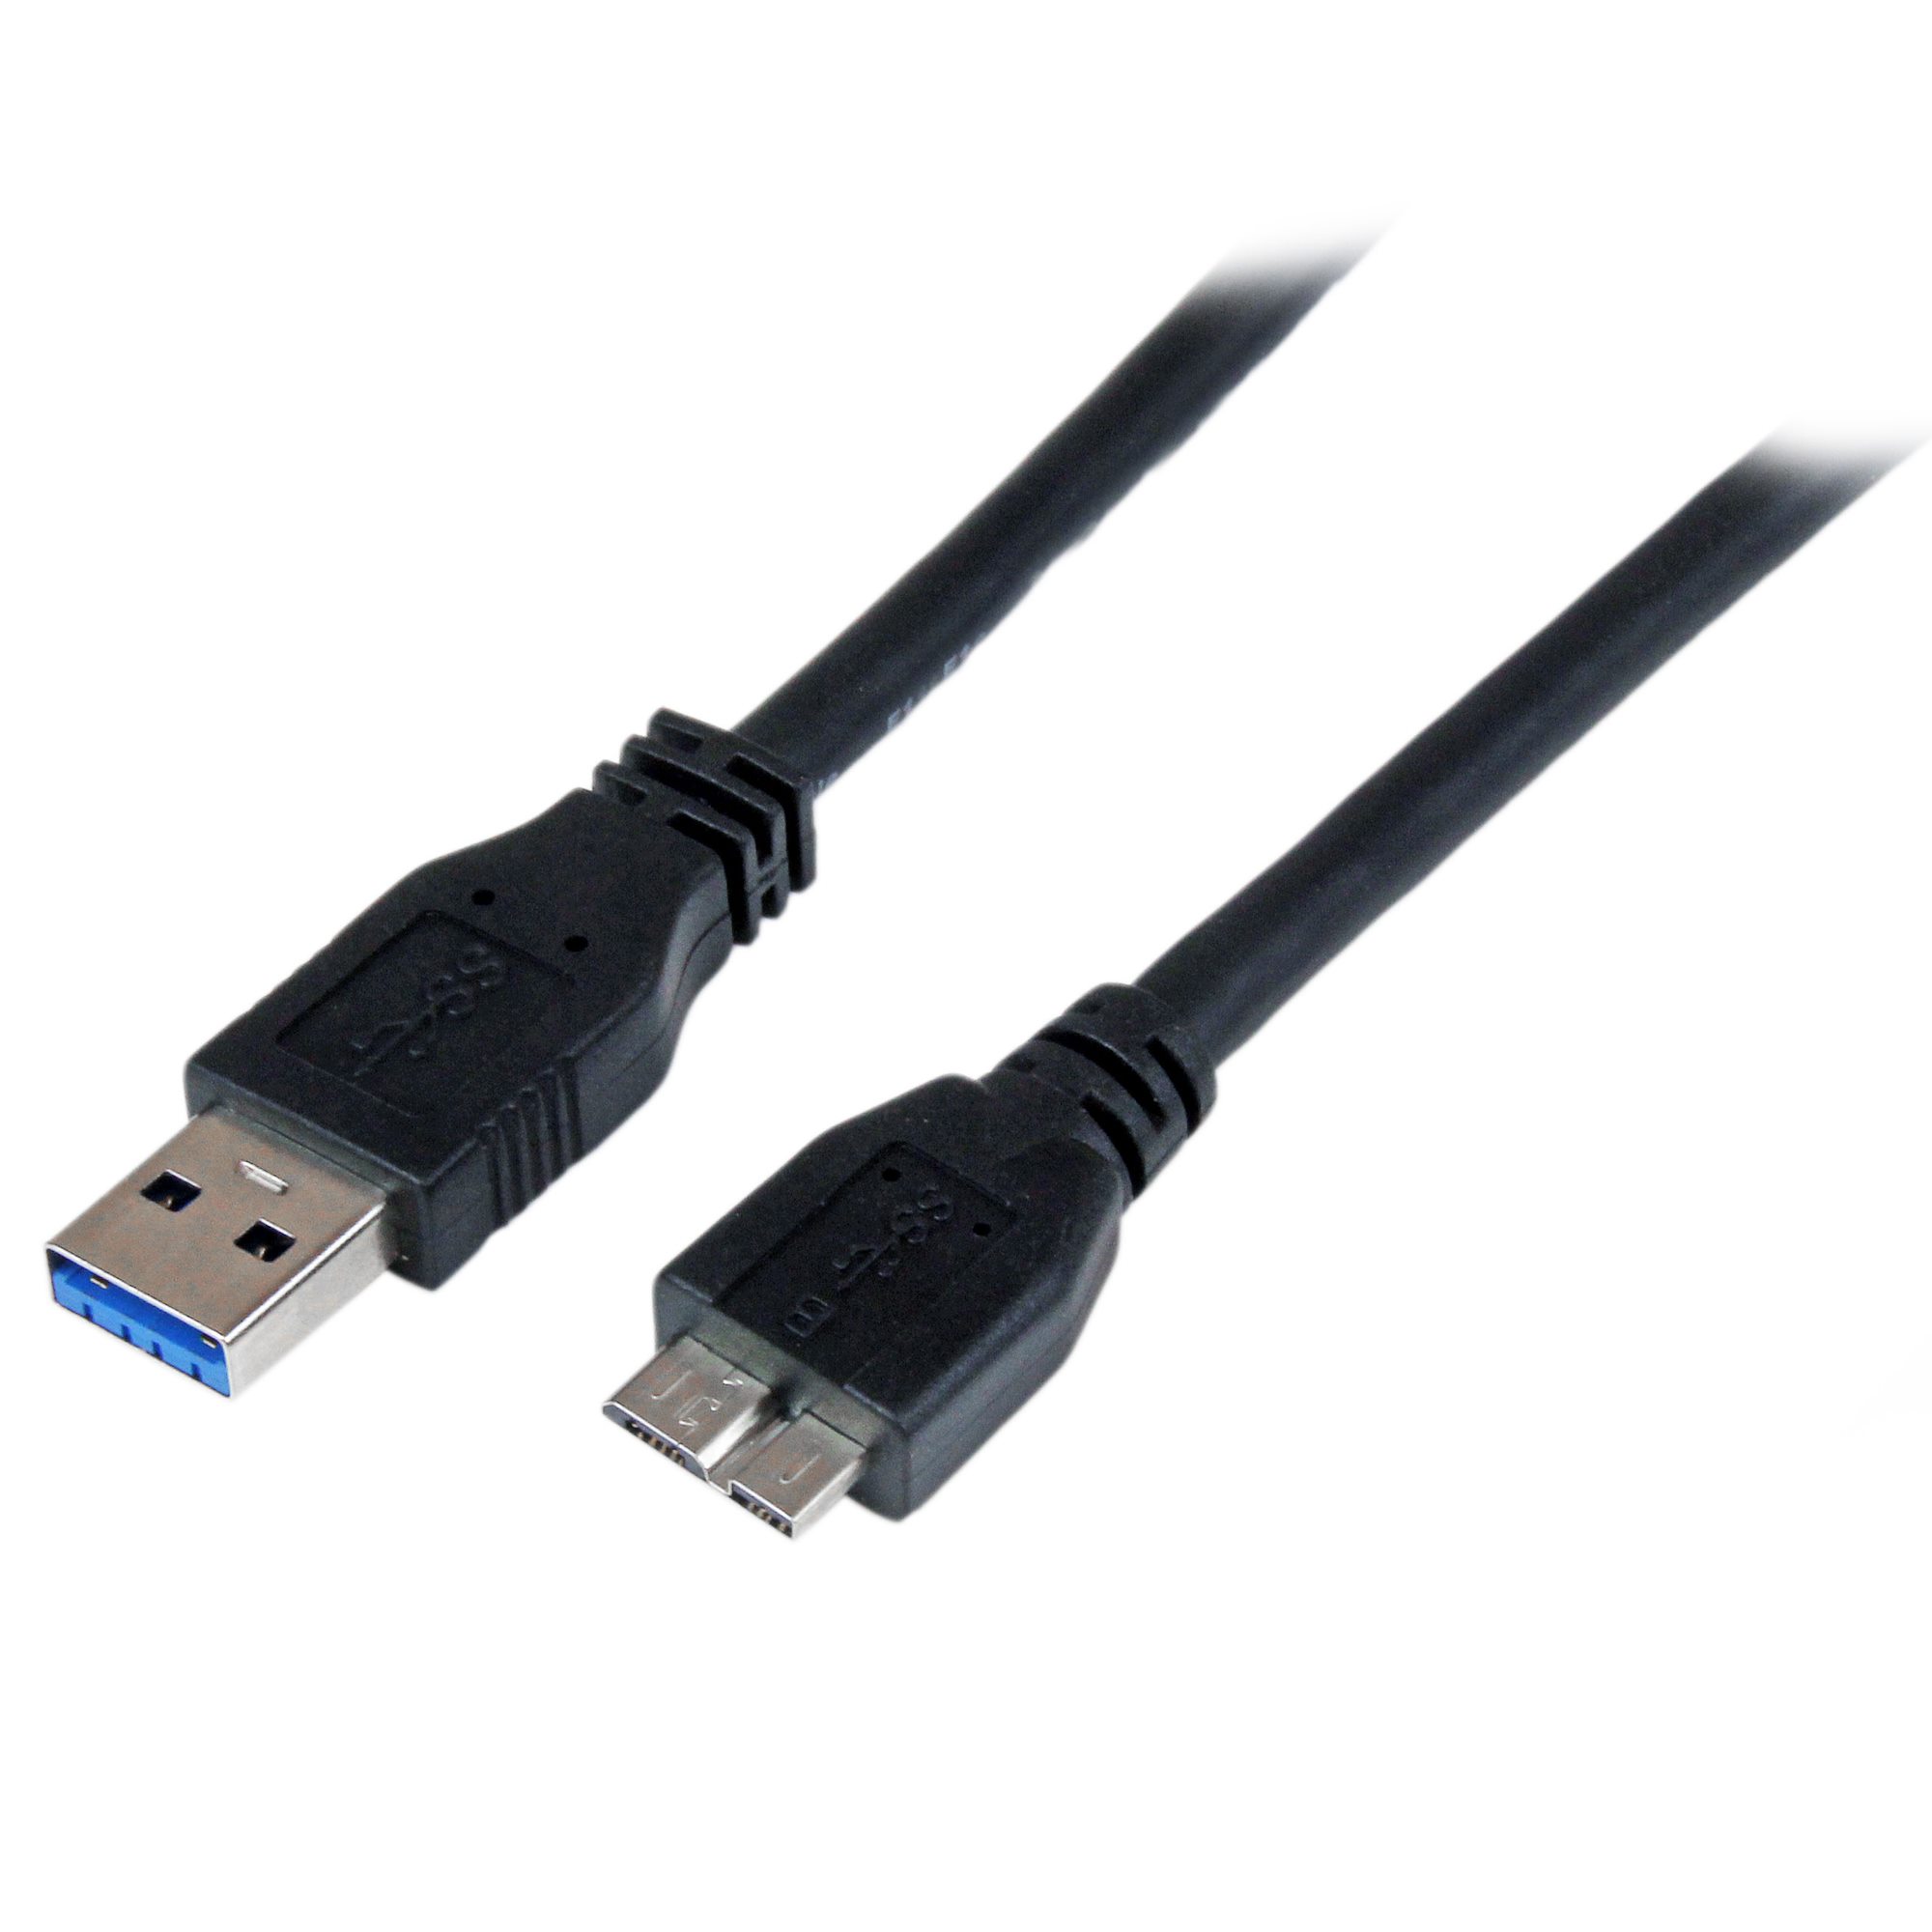 forpligtelse Undervisning støj 1m 3 ft Certified USB 3.0 Micro B cable - USB 3.0 Cables | StarTech.com